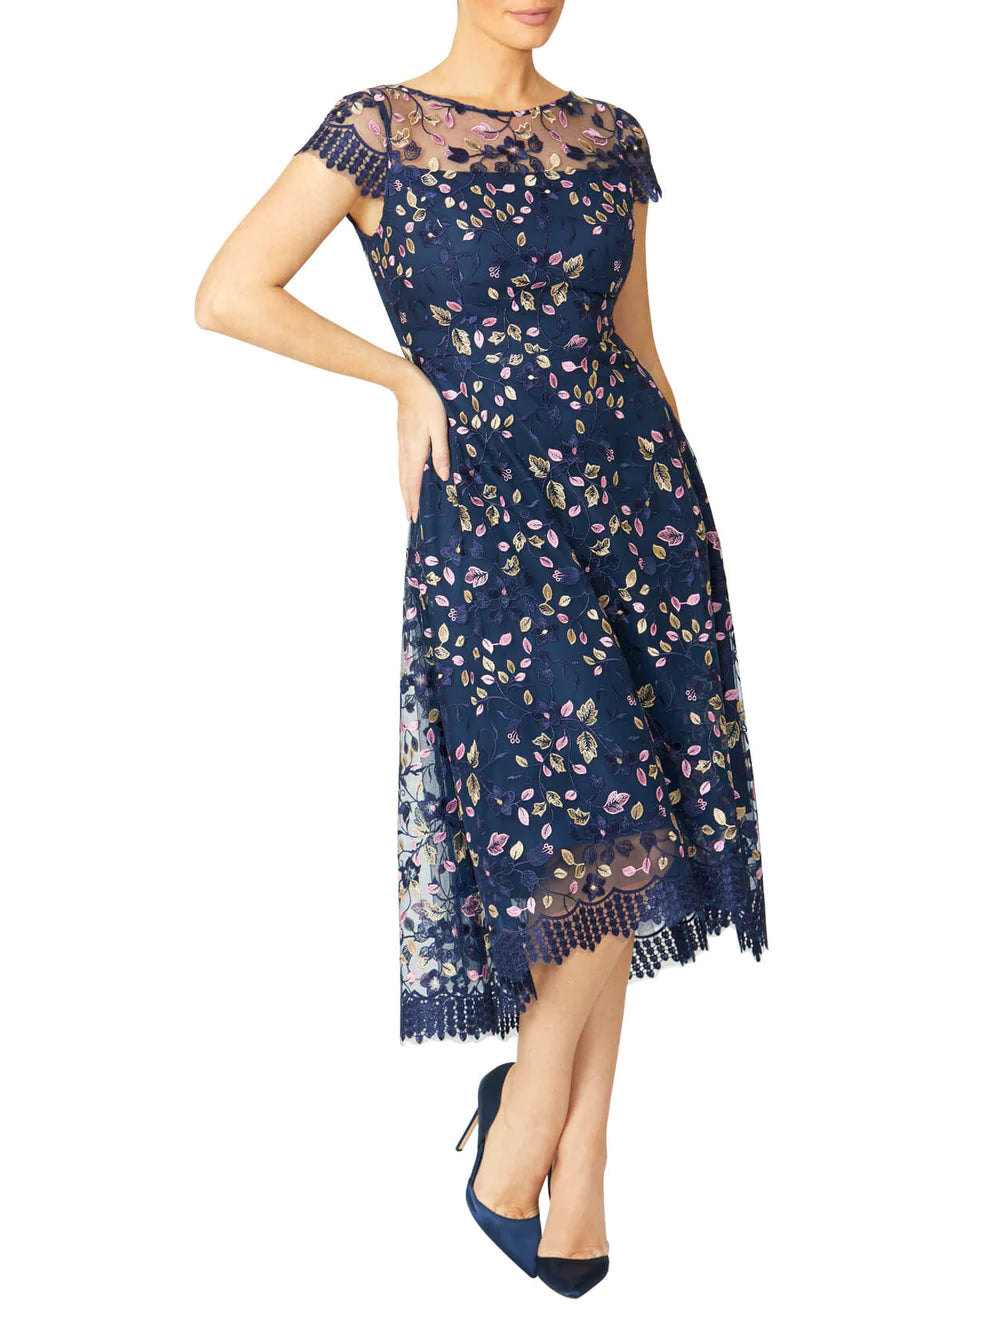 Anthea Crawford Stellar Embroidered A-Line Dress - Navy